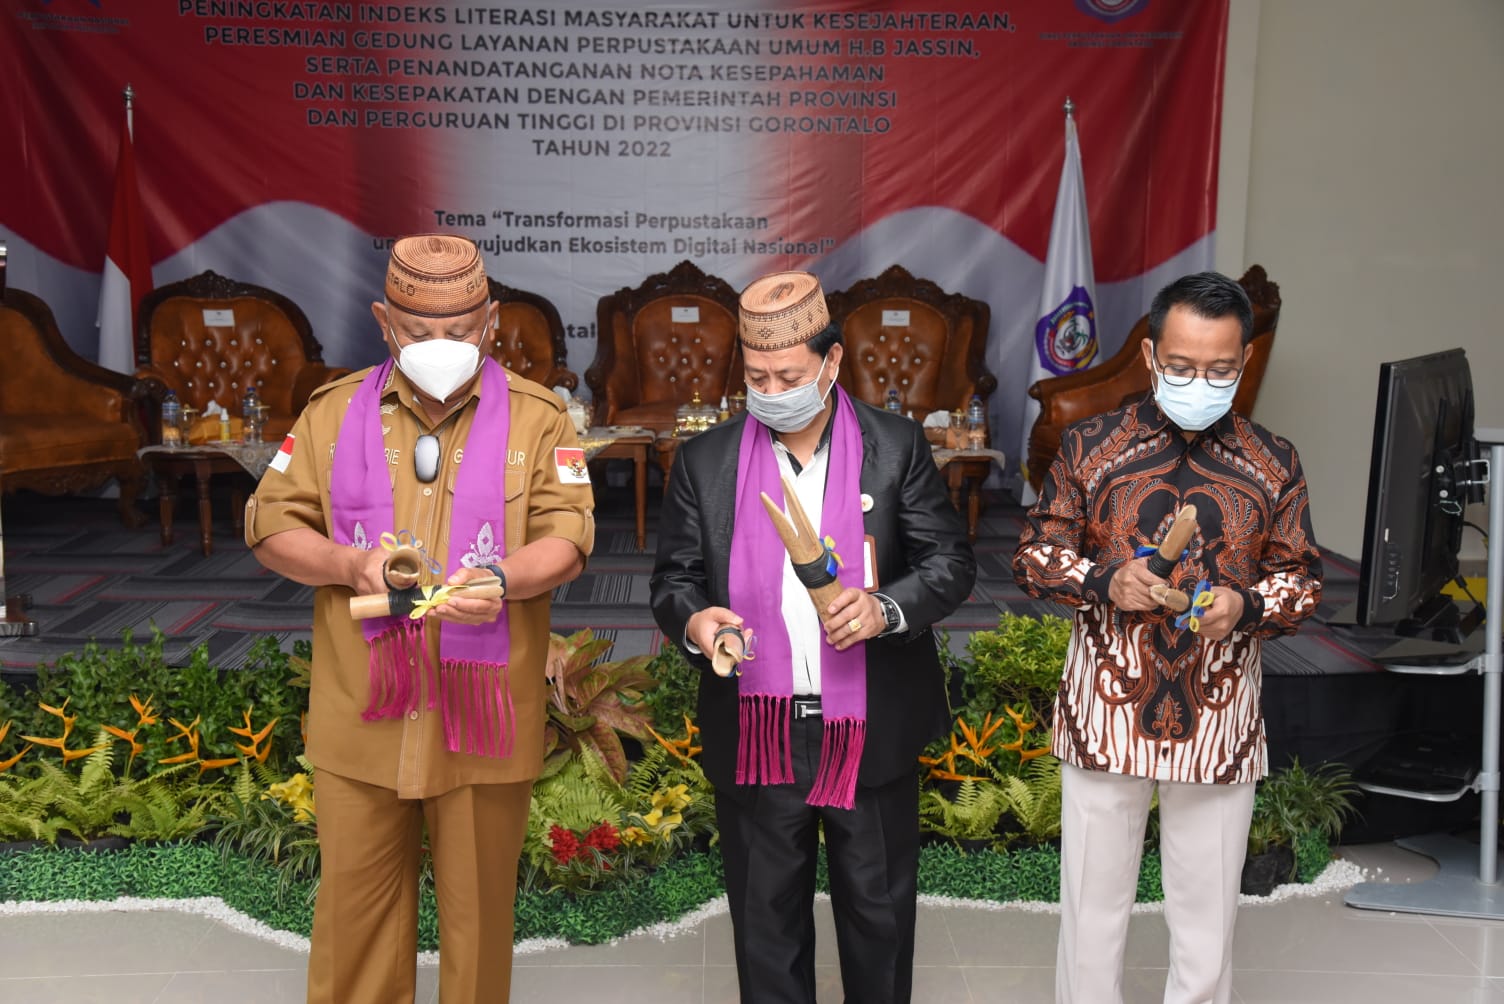 Gubernur Provinsi Gorontalo Dorong Arpusda Bertransformasi Digital